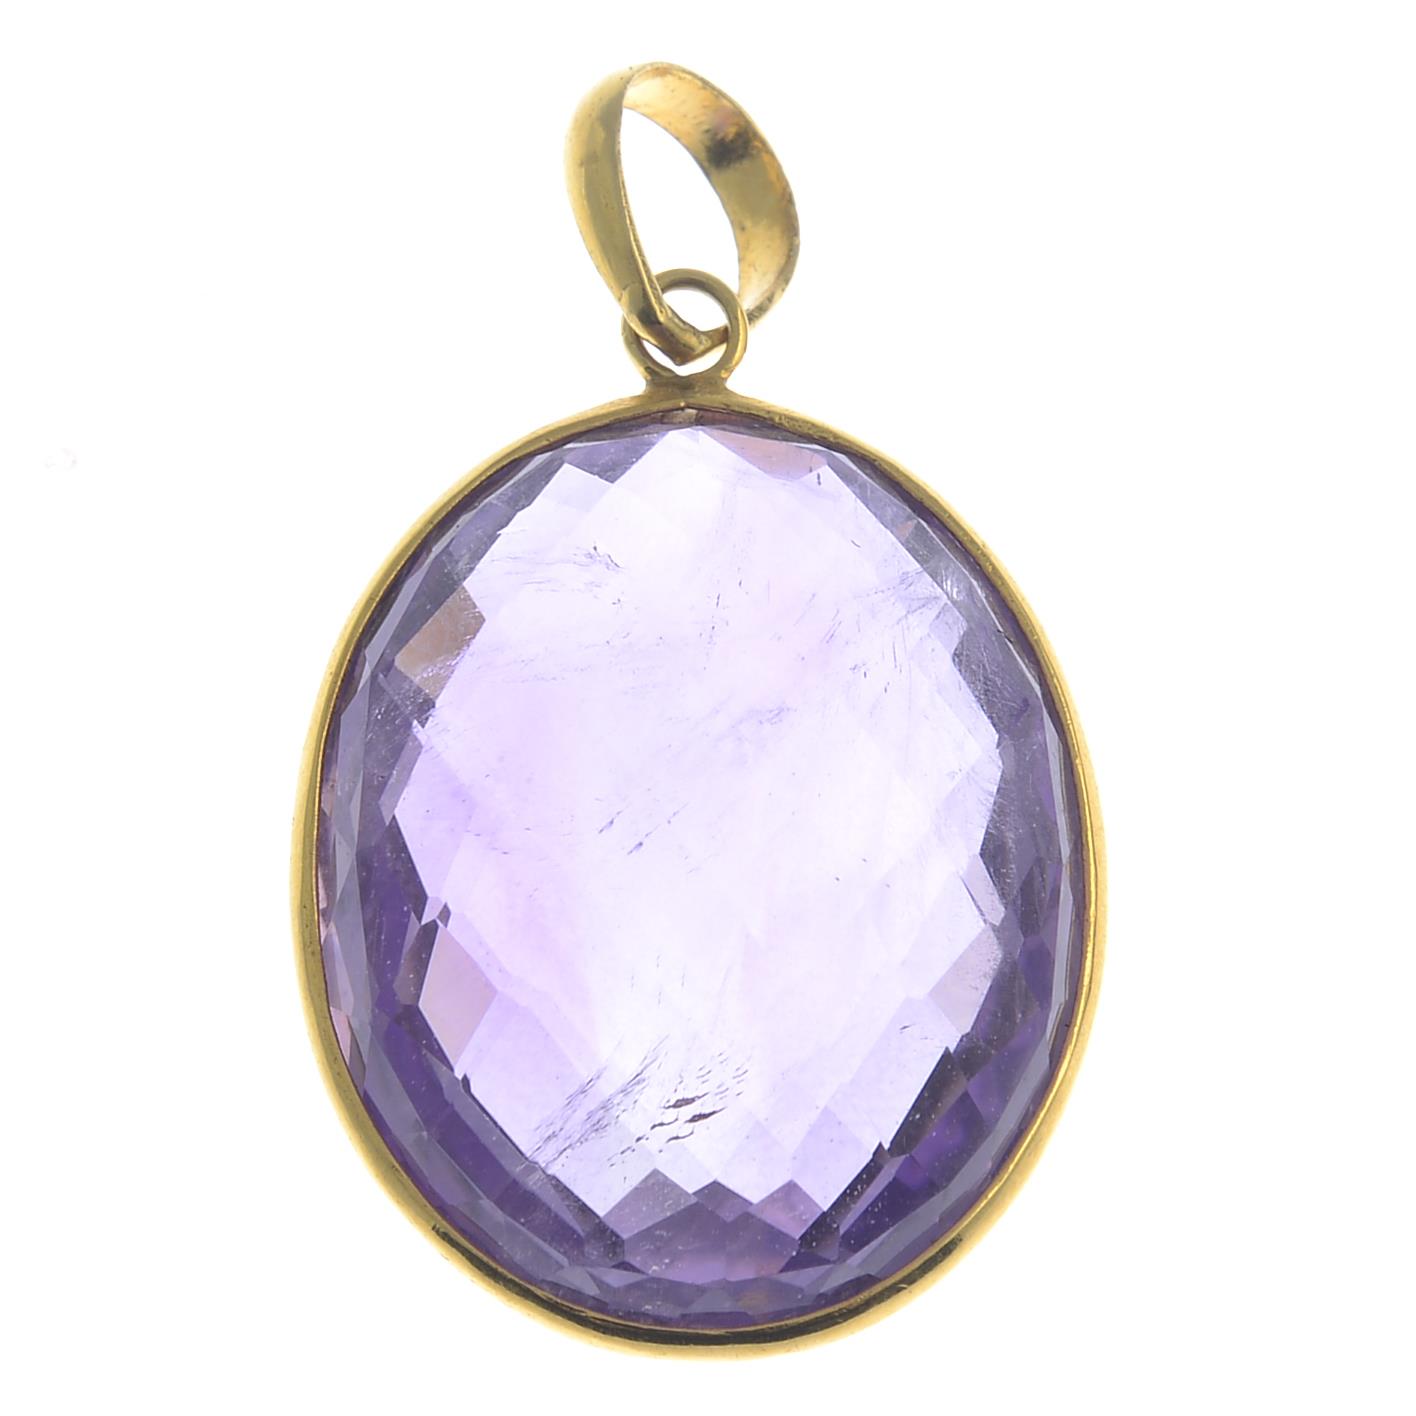 An amethyst pendant. - Image 2 of 2